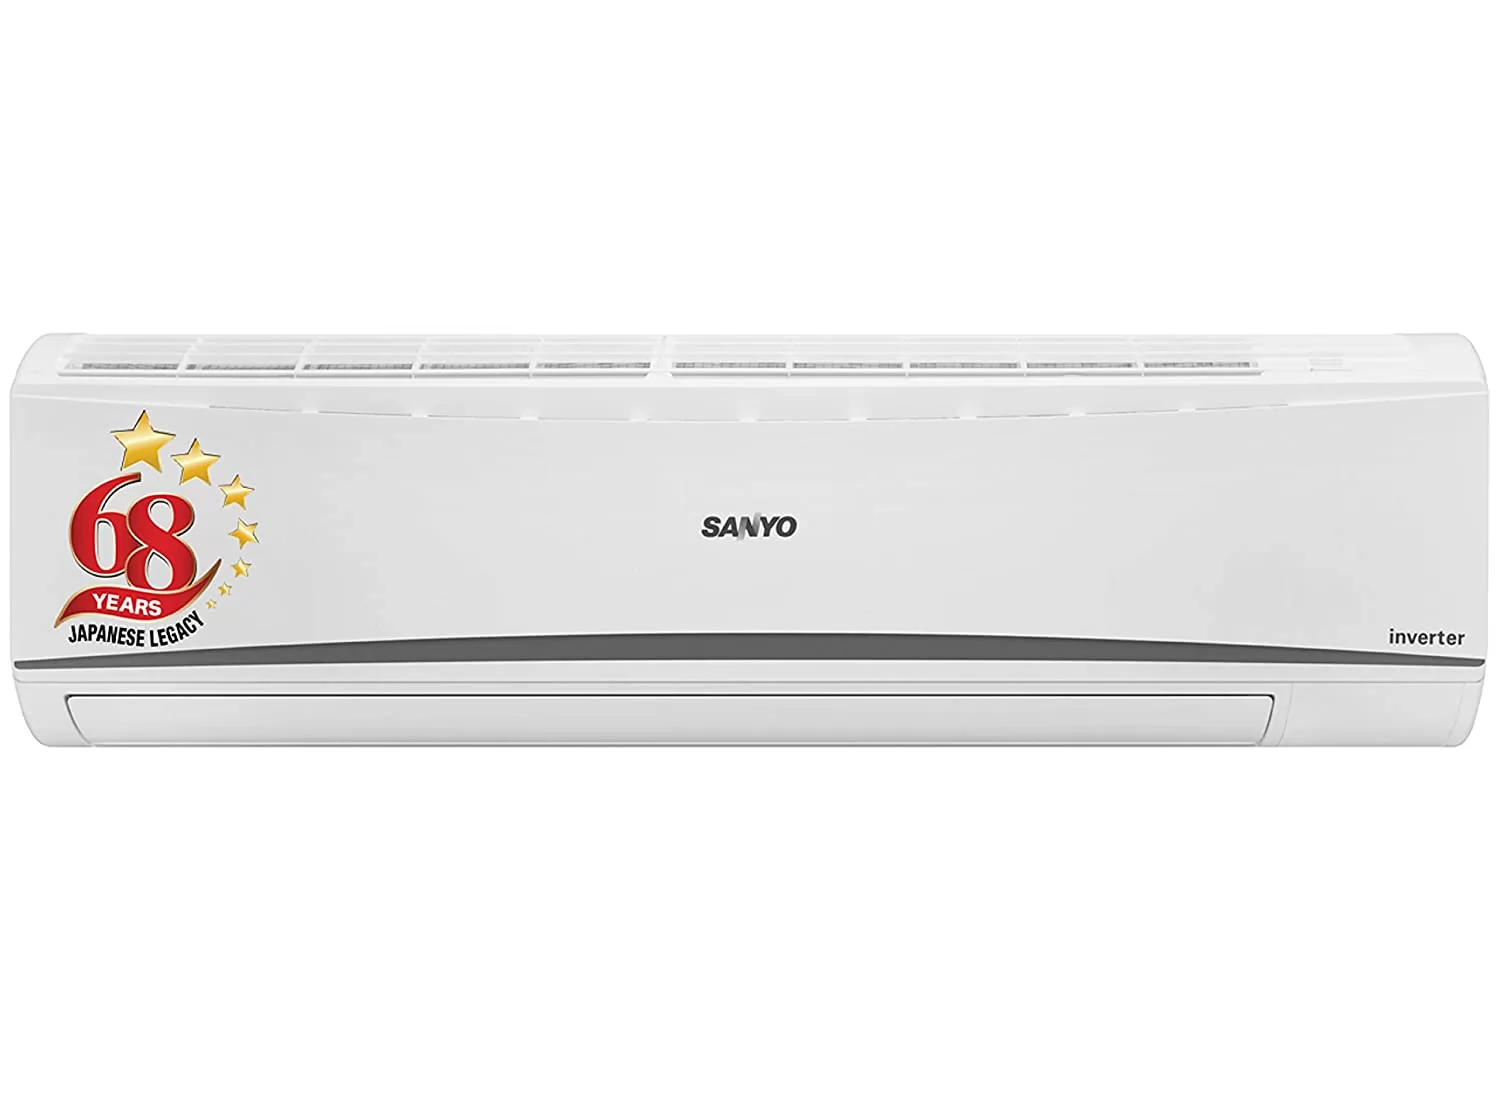 Sanyo Dual Inverter Split AC (Copper, PM 2.5 Filter, 2020 Model, SI/SO-15T3SCIC White)